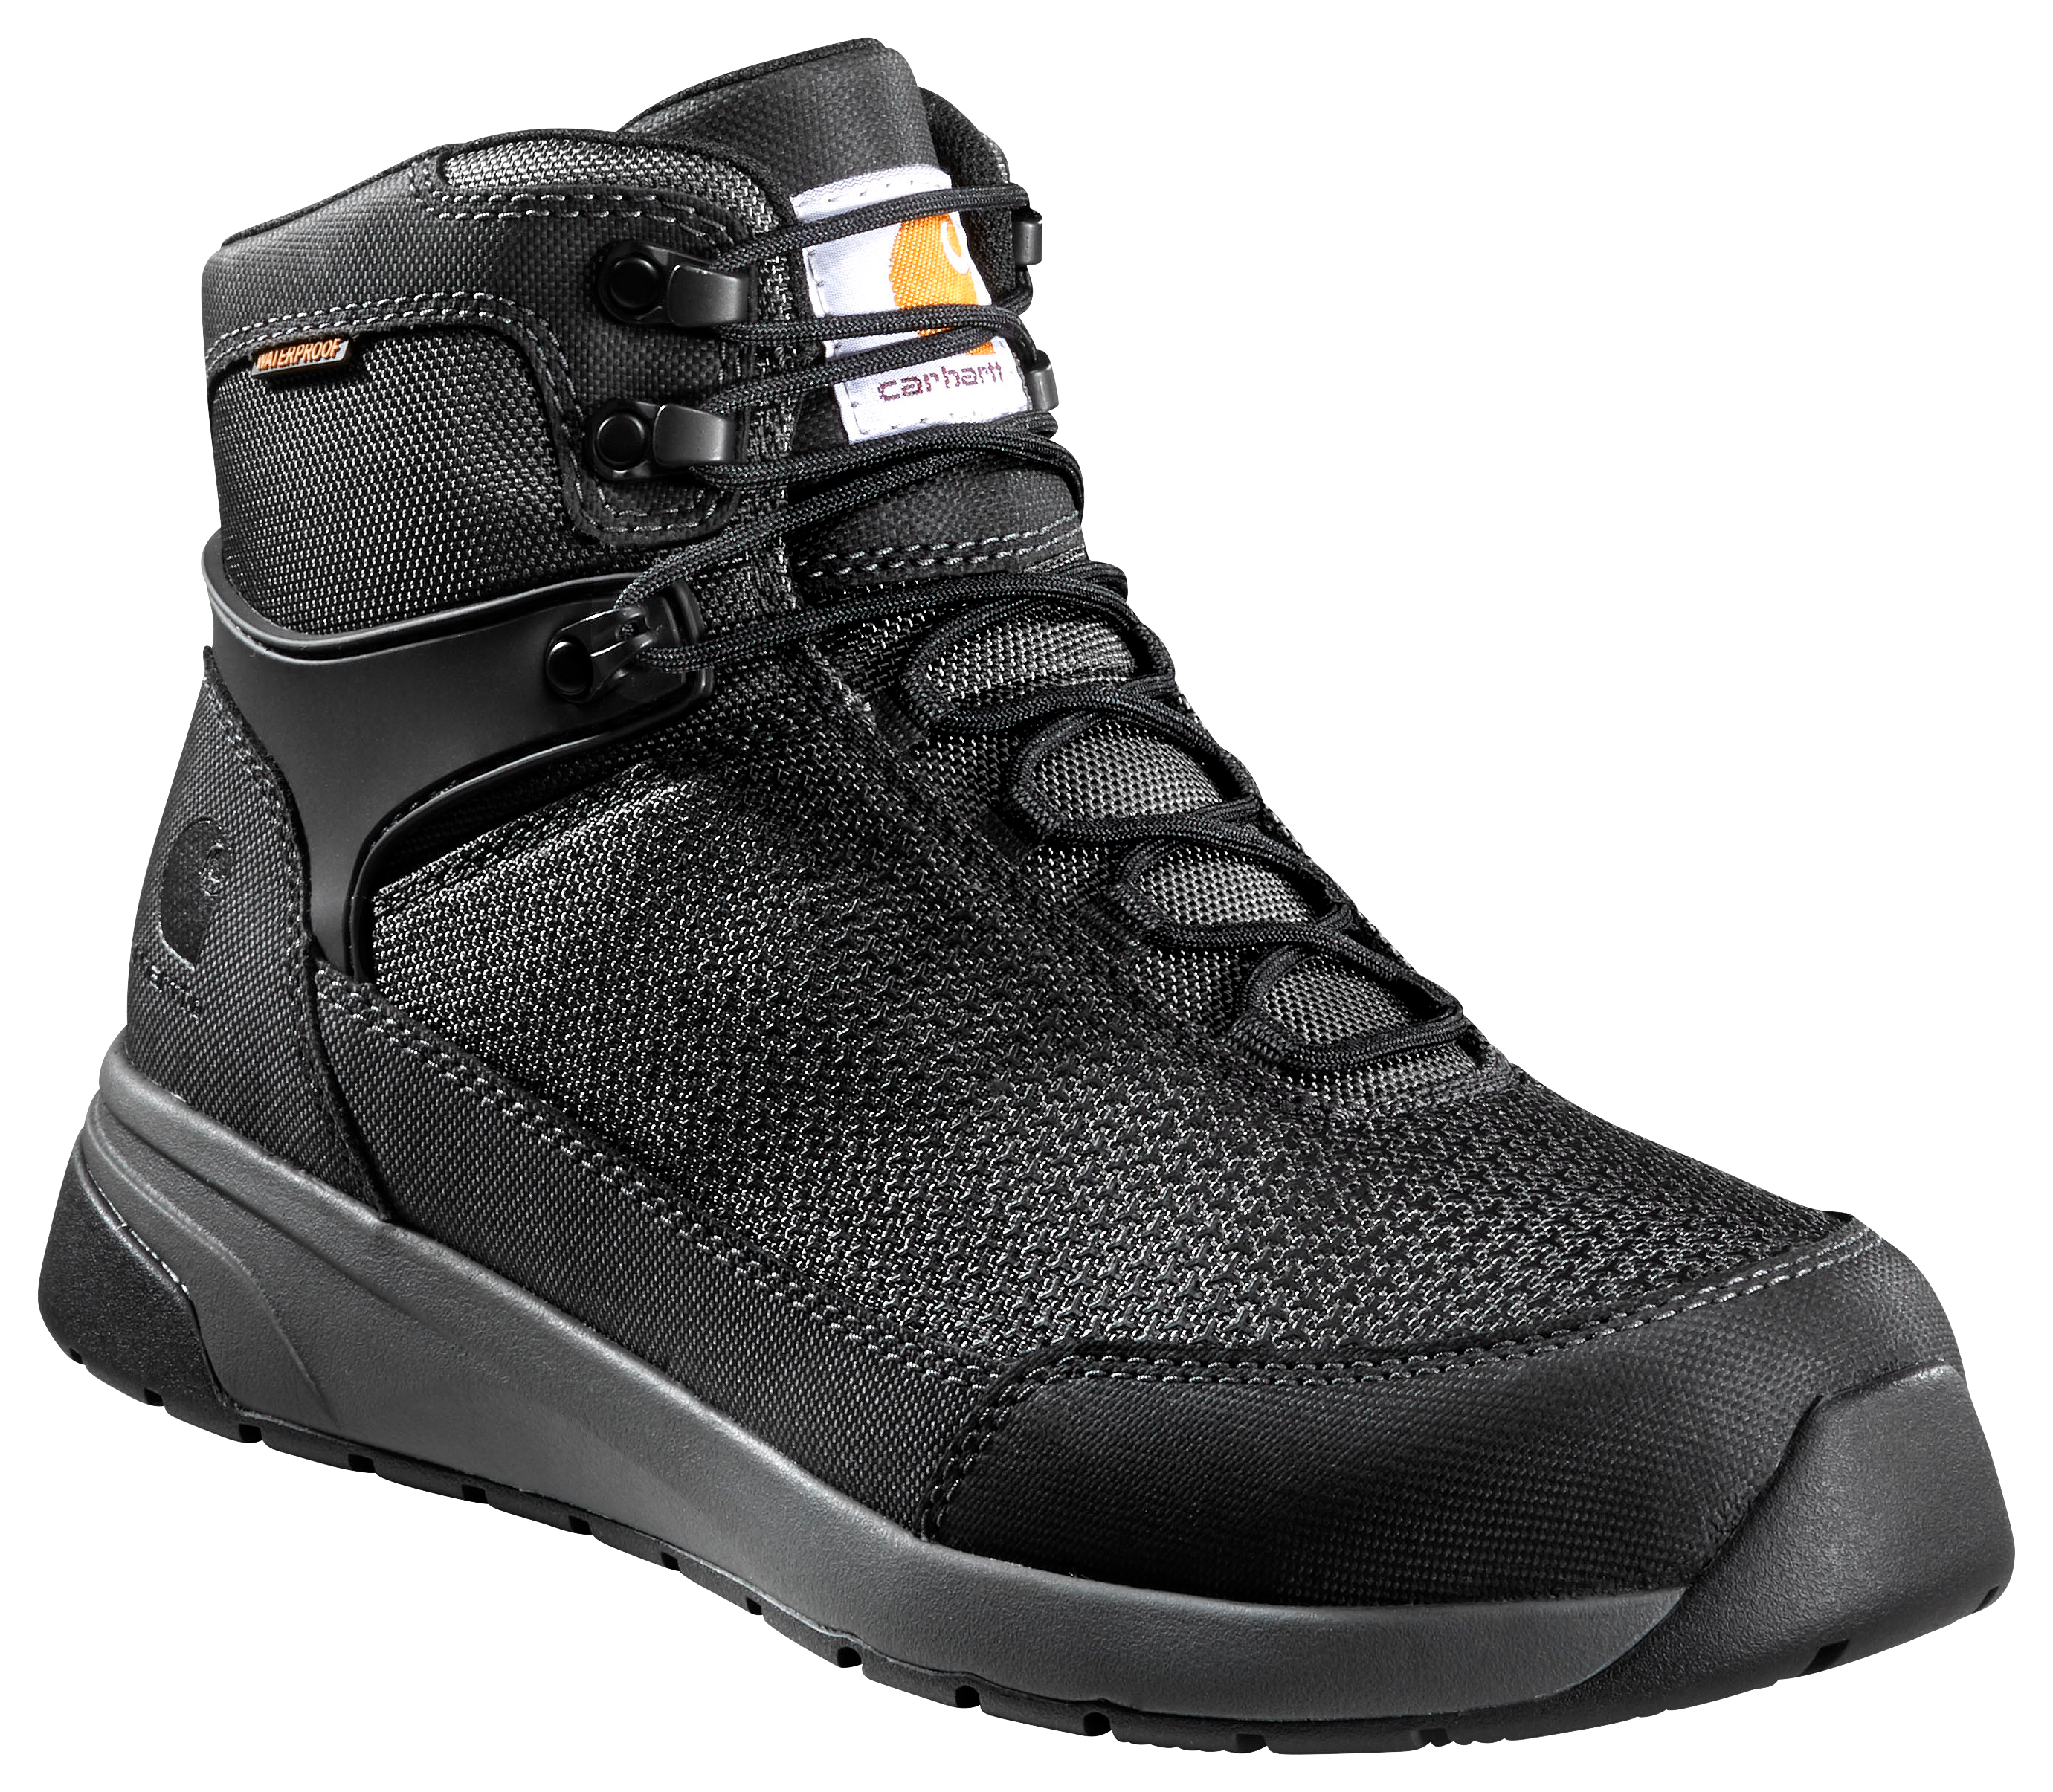 Carhartt Force 6"" Nano Composite-Toe Work Boots for Men - Black - 11.5M